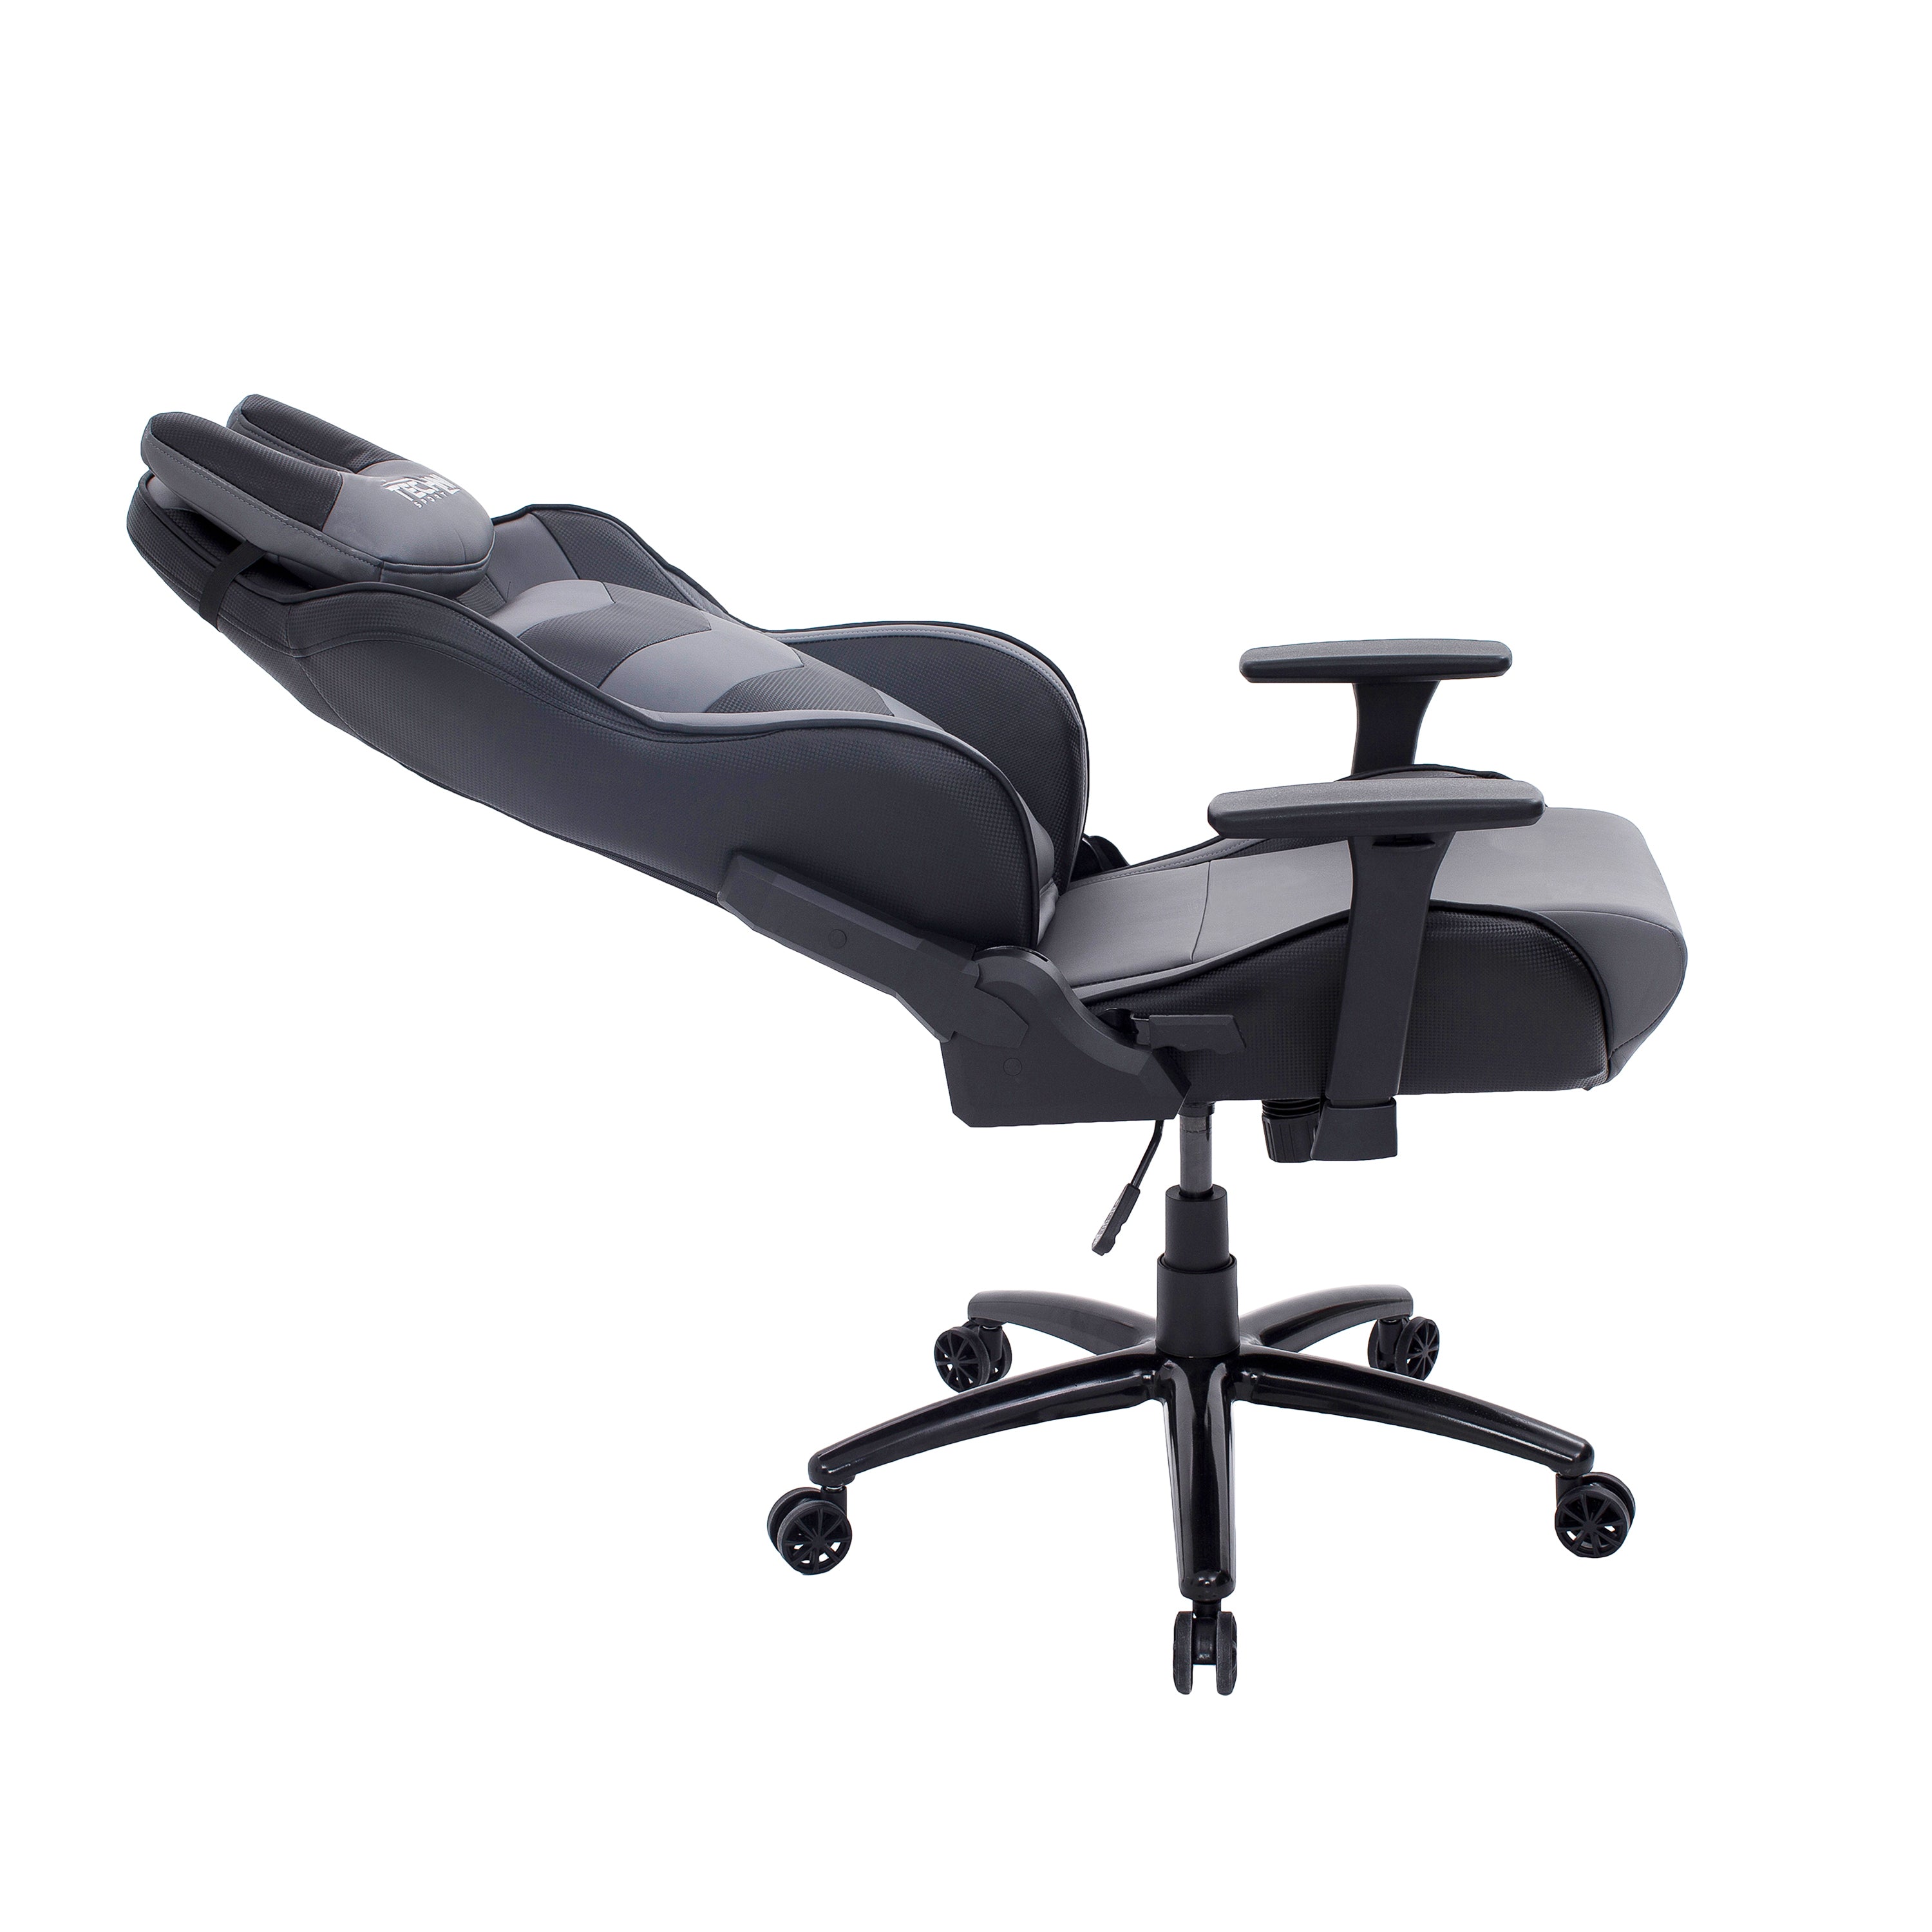 Techni Sport TS-61 Ergonomic High Back Racing Style Gaming Chair (Grey/Black)